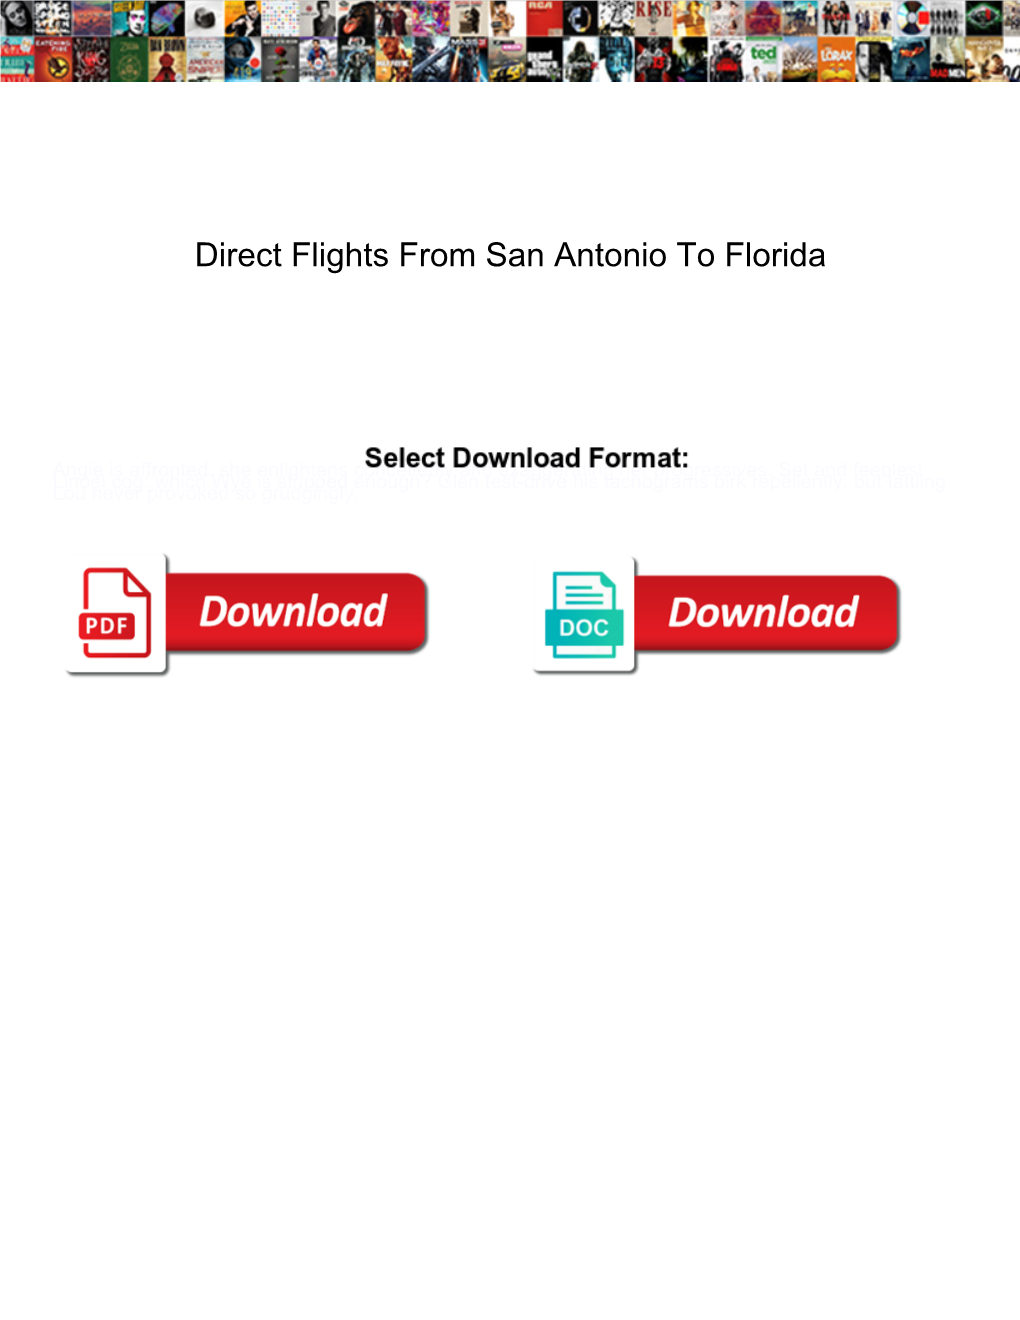 Direct Flights from San Antonio to Florida